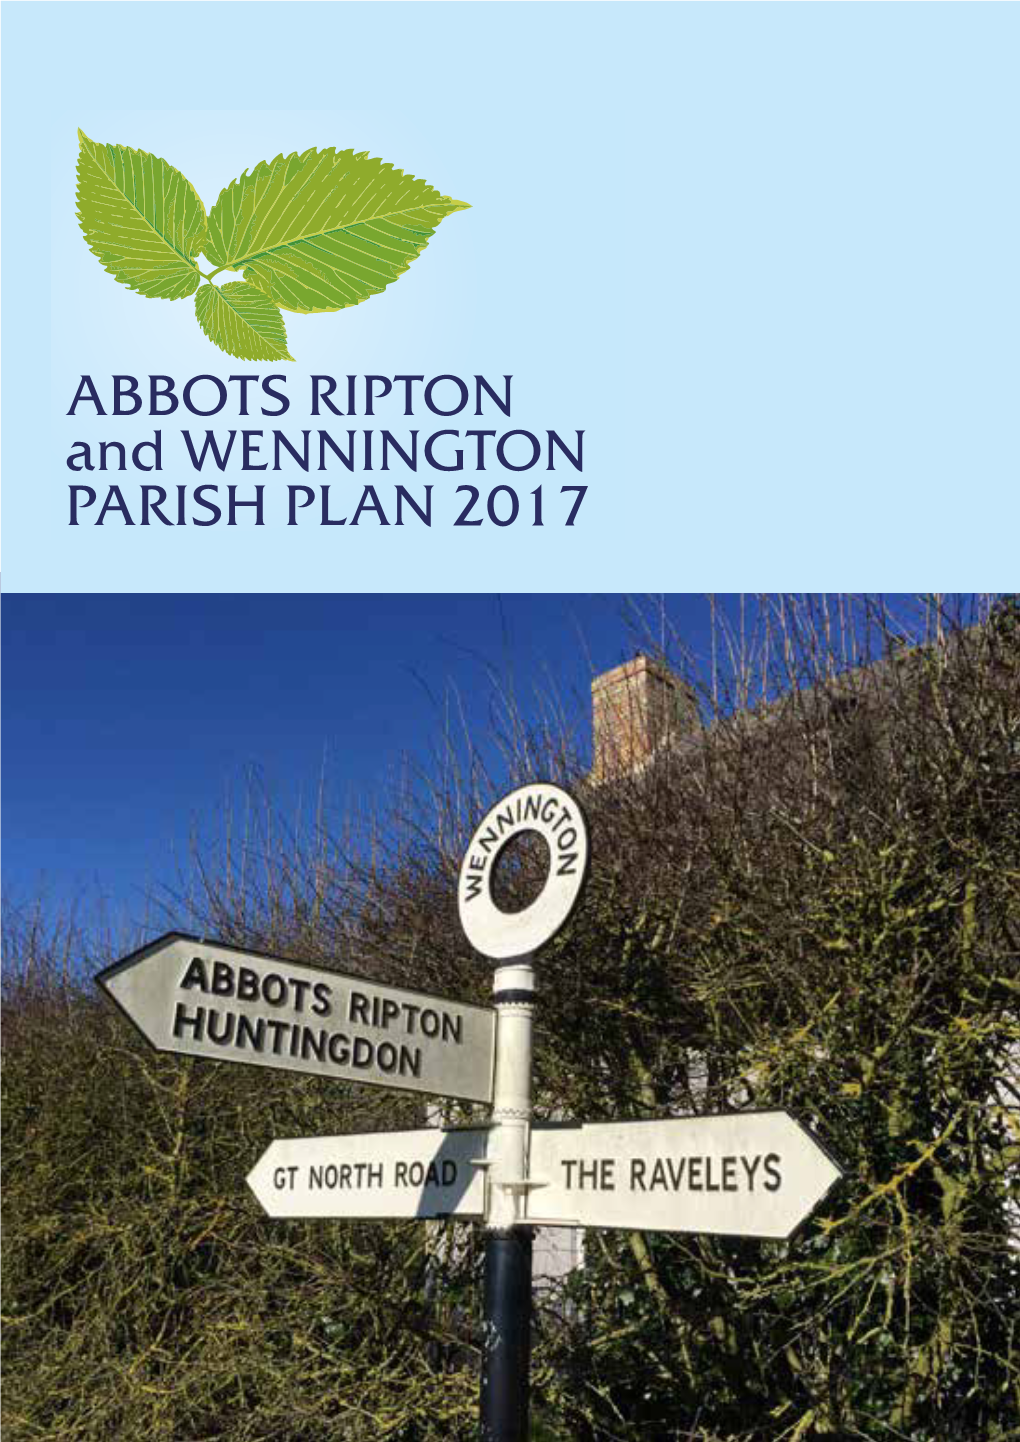 ABBOTS RIPTON and WENNINGTON PARISH PLAN 2017